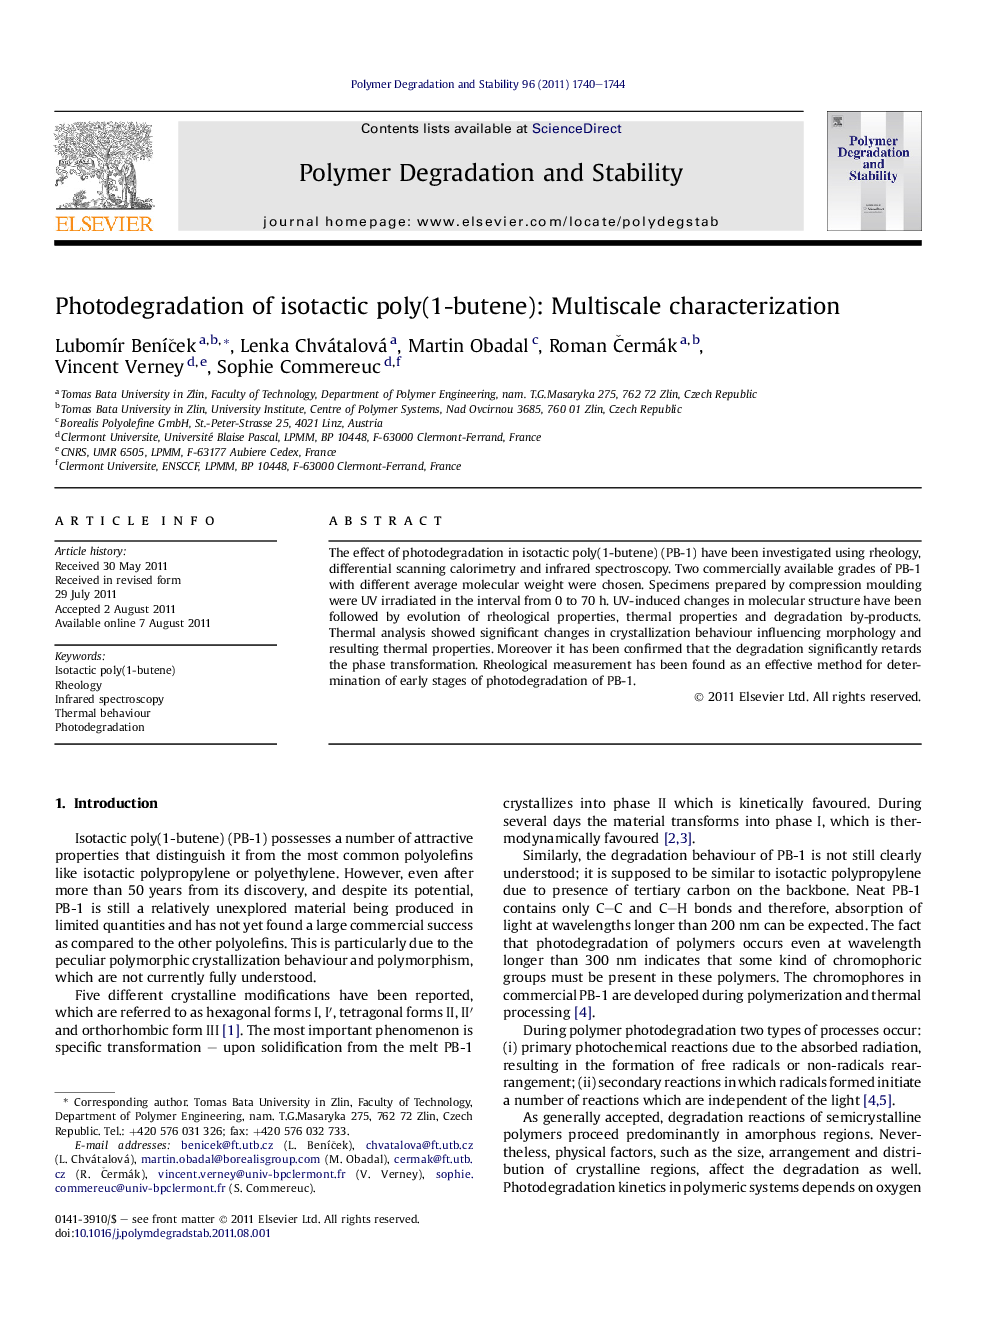 Photodegradation of isotactic poly(1-butene): Multiscale characterization